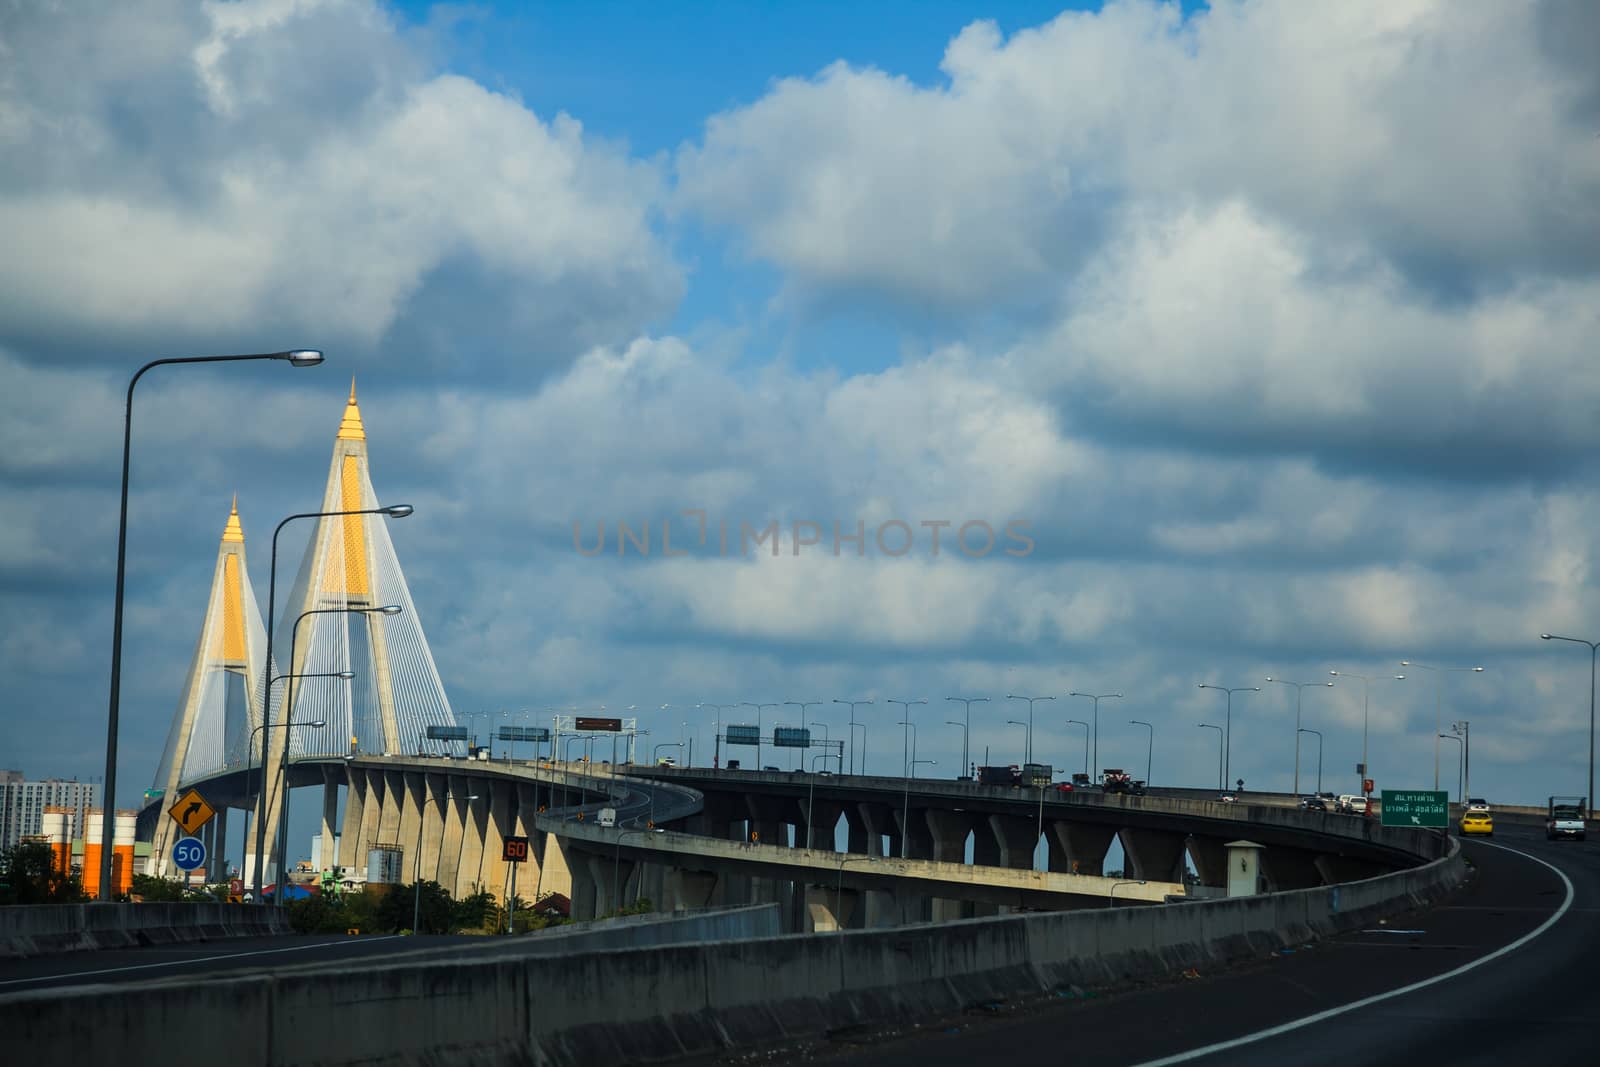 Kanchanaphisek bridge is a cable-stayed bridge crossing the chao phraya river.